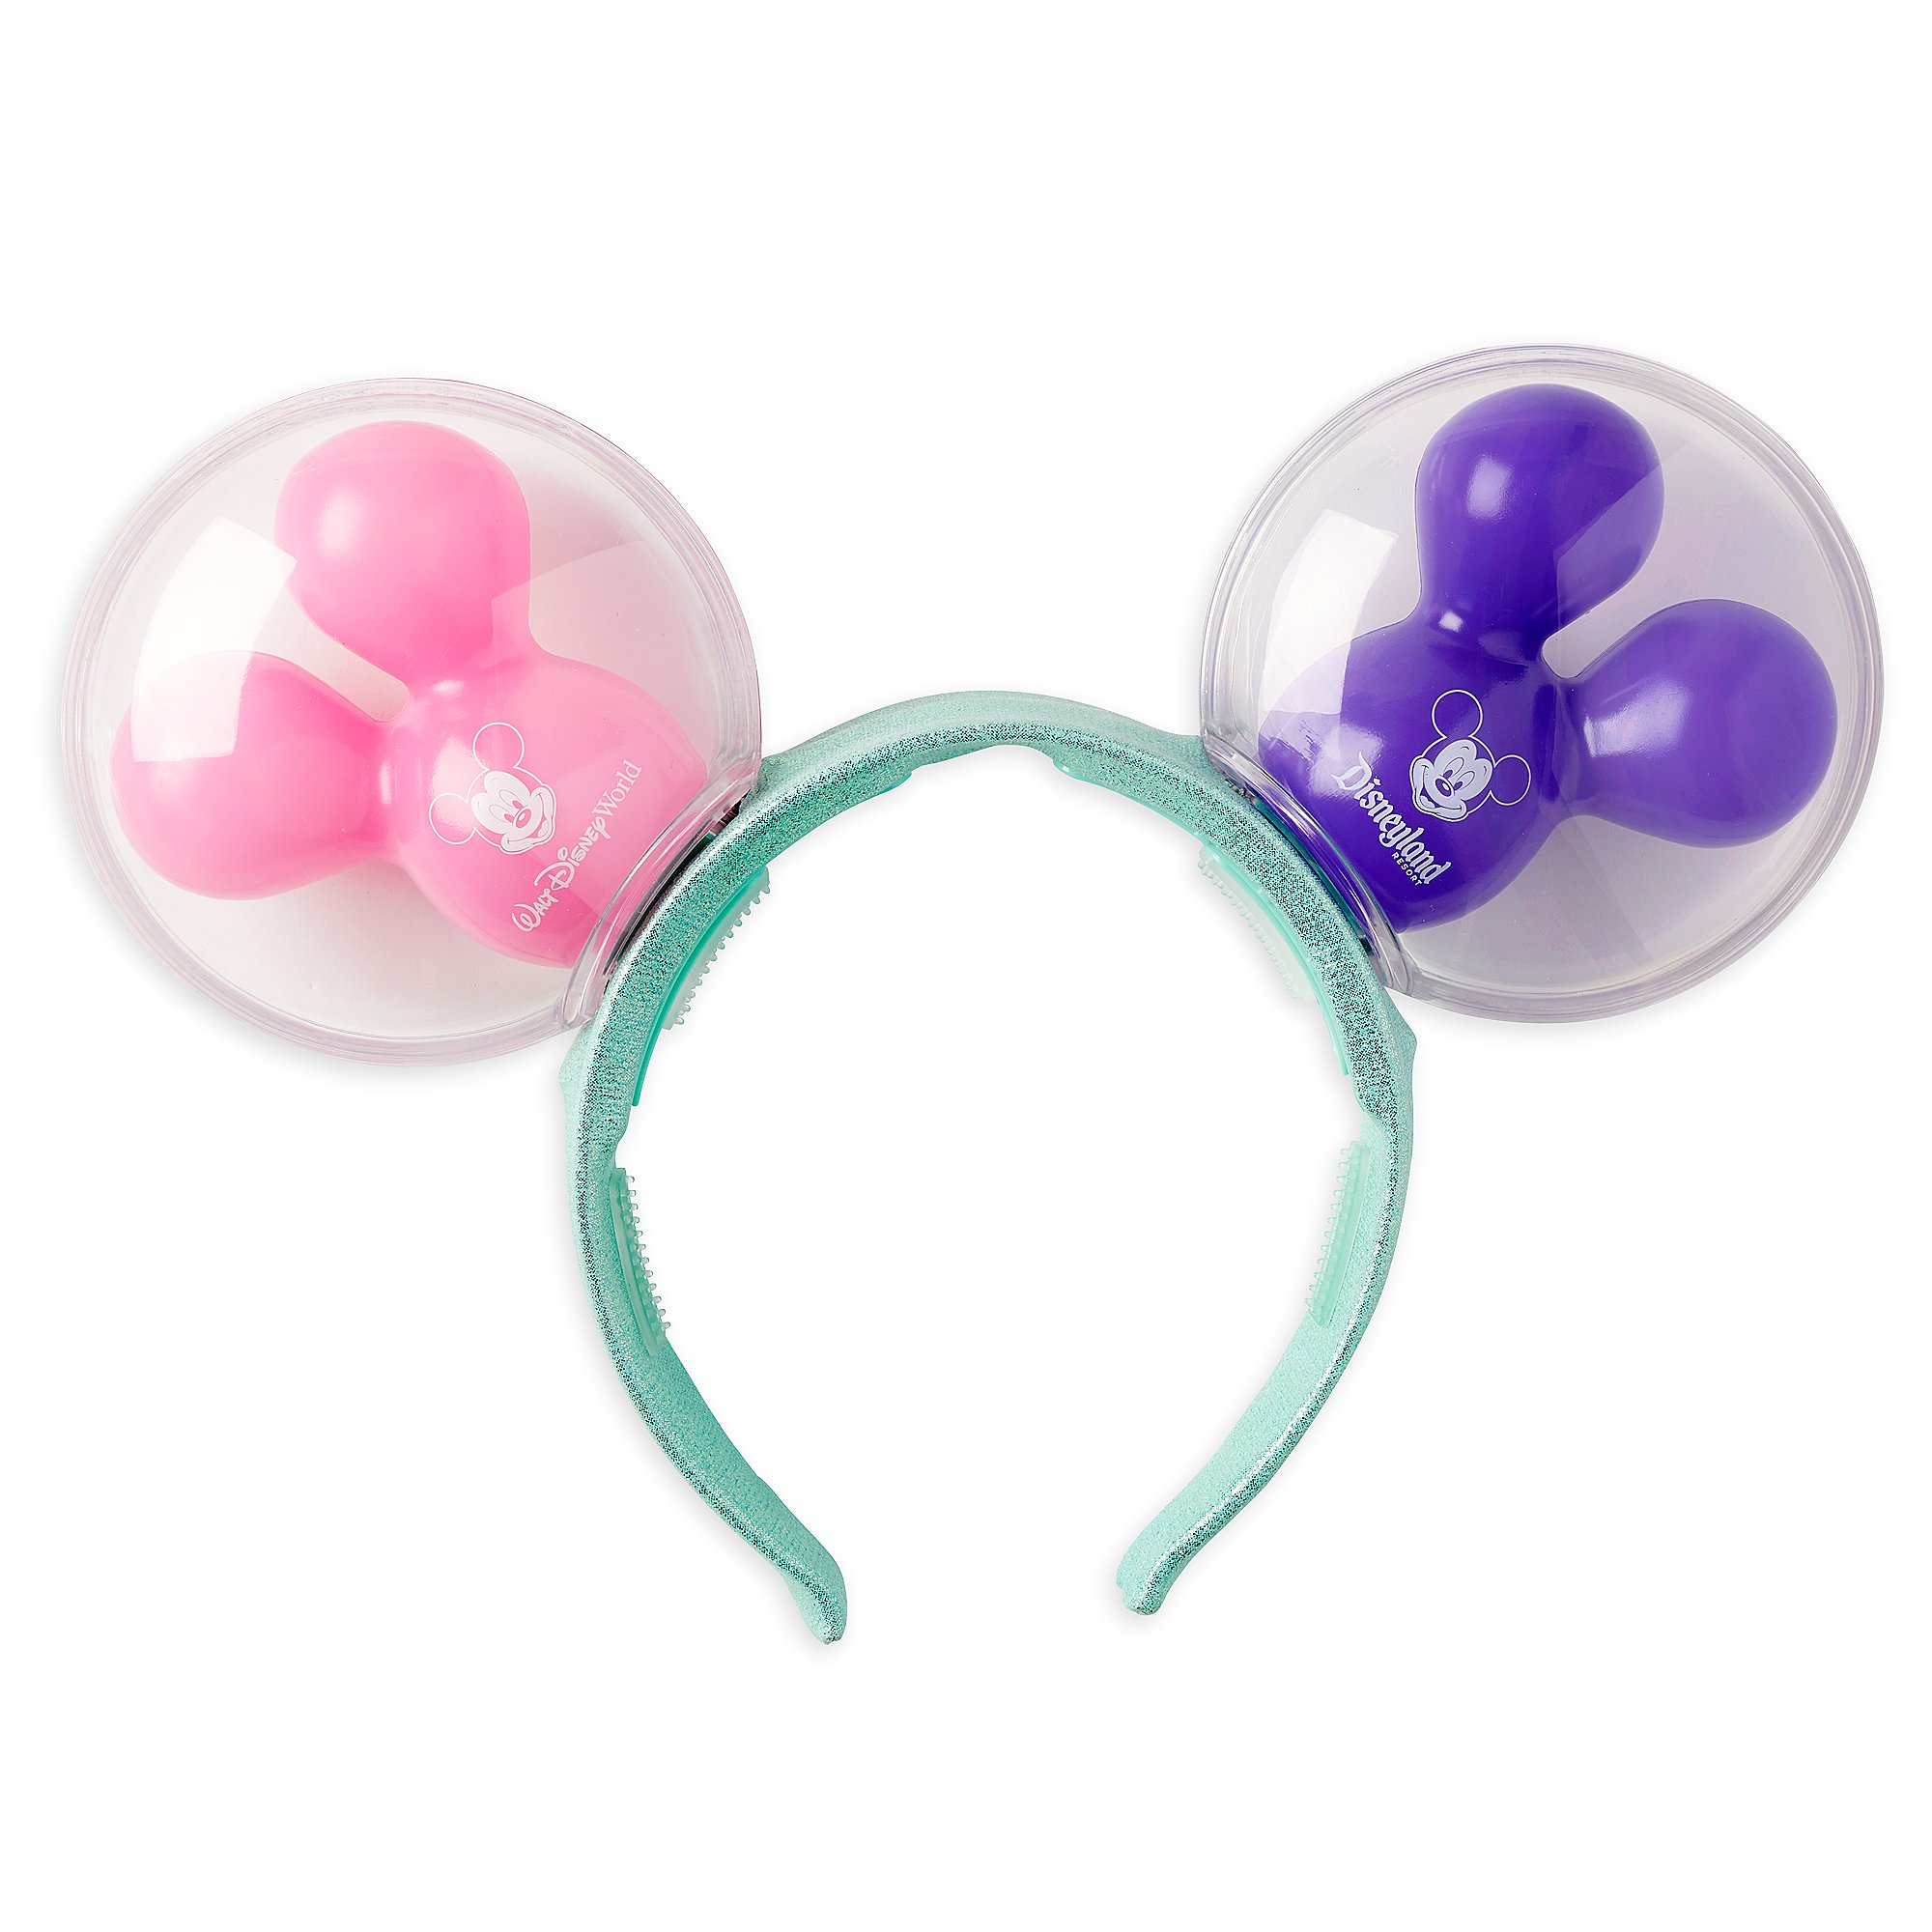 Disney Parks Balloon Light-Up Ears Headband for Adults image